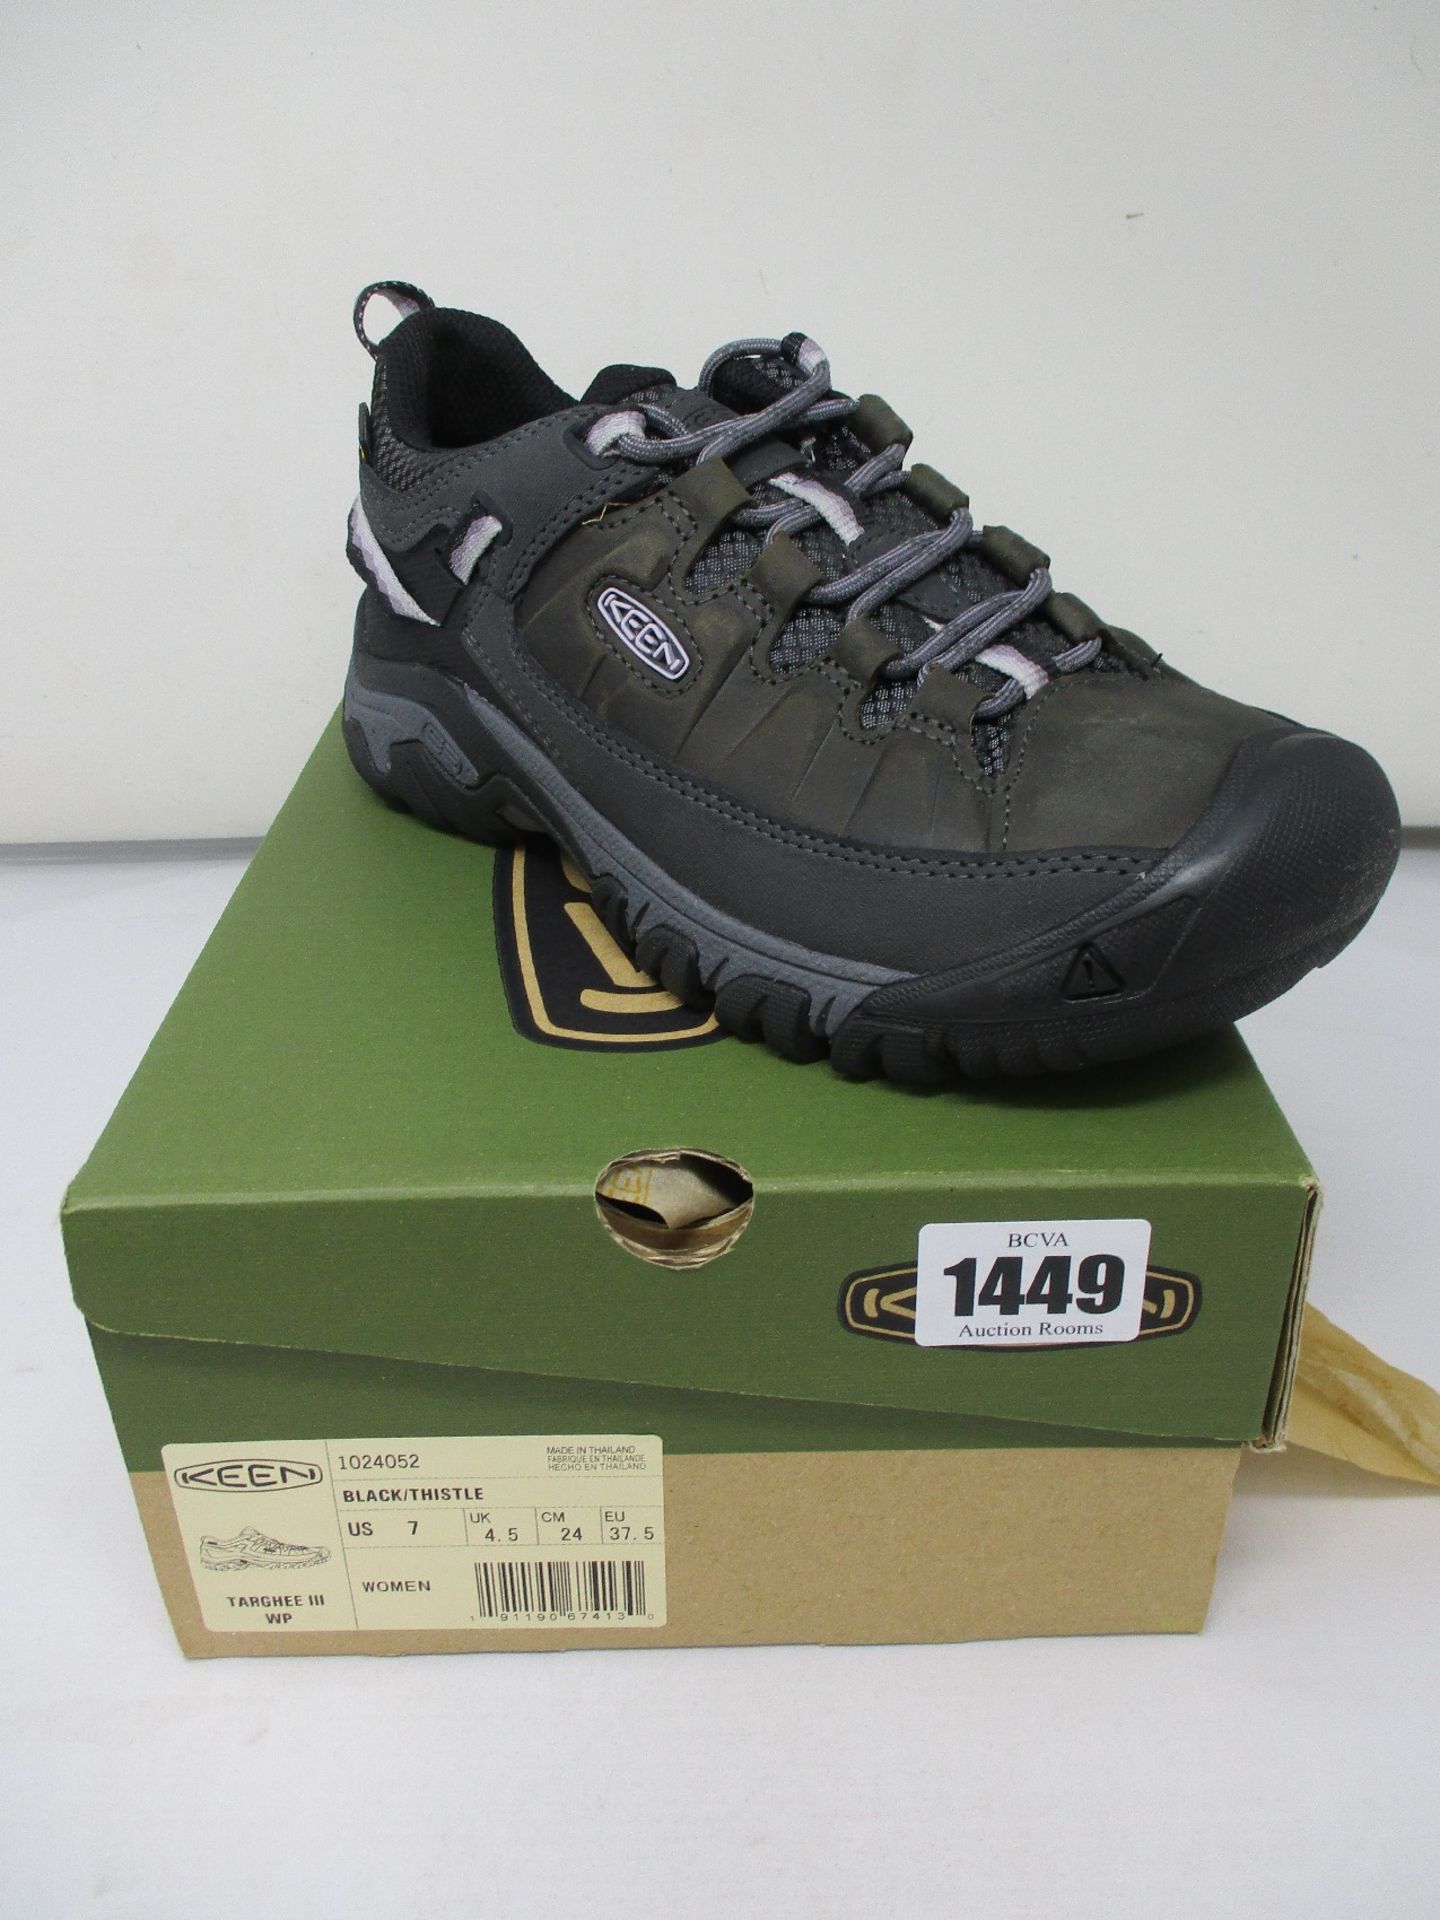 A pair of women's as new Keen Targhee III waterproof hiking shoes (UK 4.5).